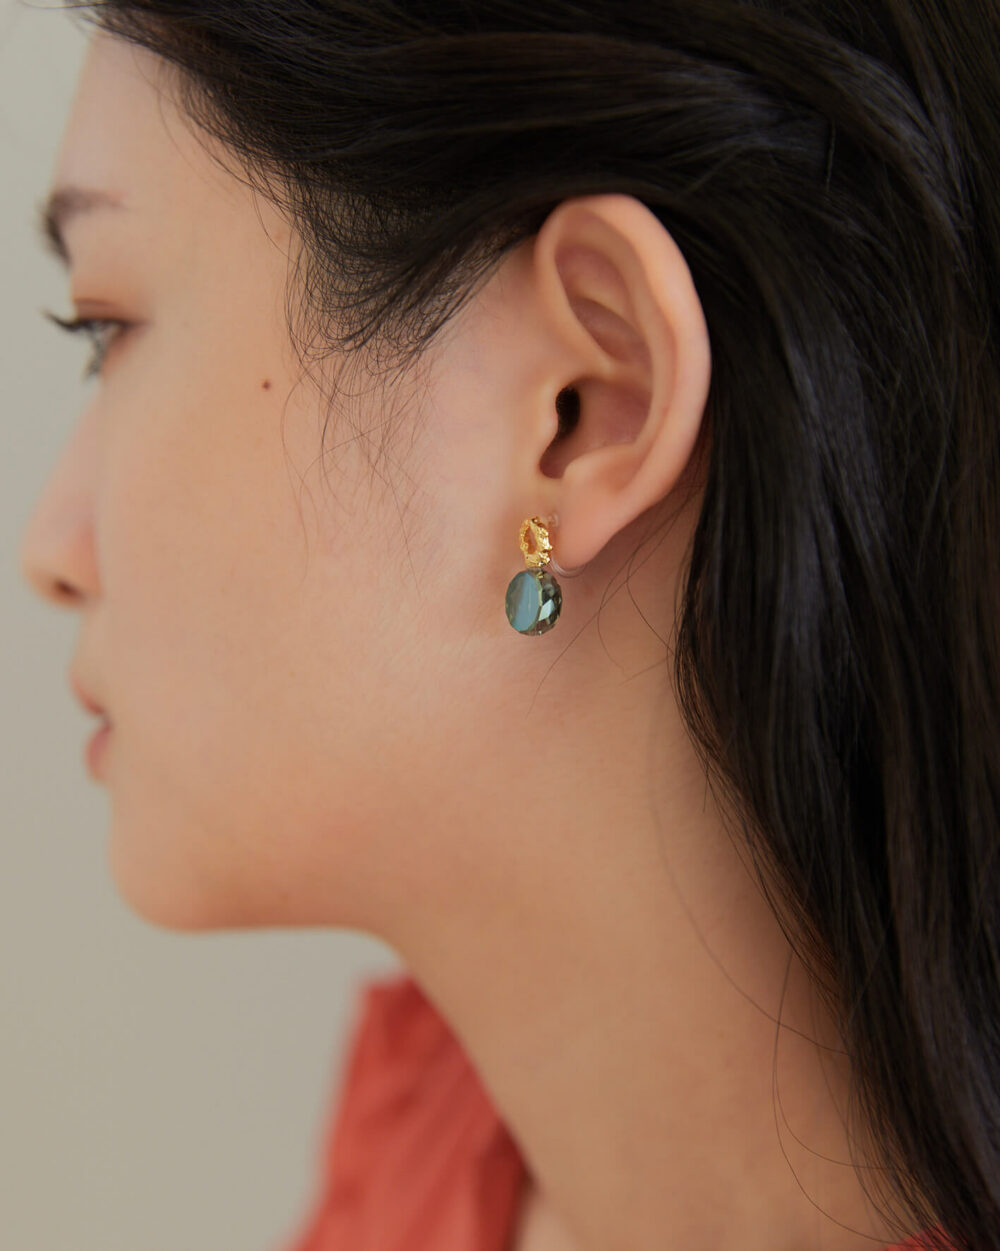 Eco安珂,韓國飾品,韓國耳環,耳針式耳環,矽膠夾耳環,透明耳夾耳環,無痛耳夾耳環,復古寶石耳環